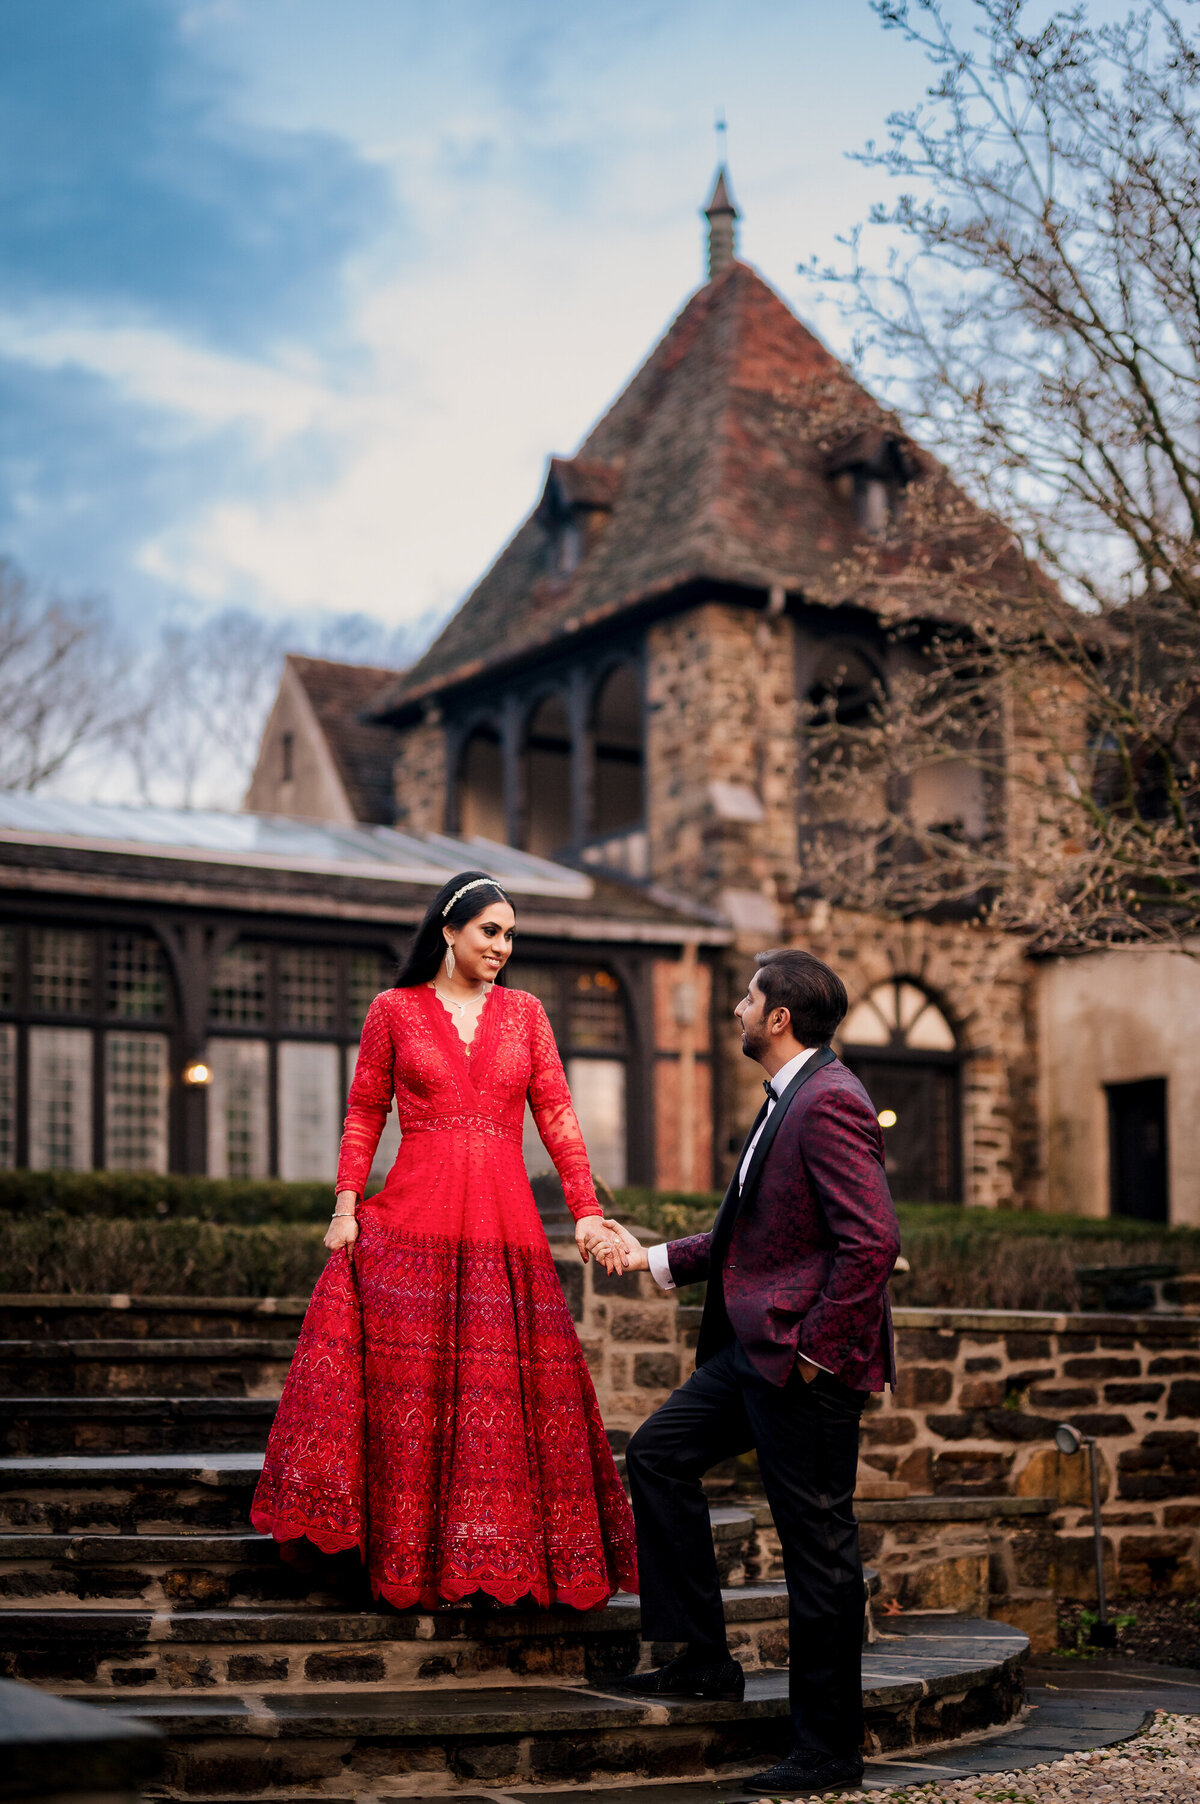 Ishan Fotografi is an experienced Indian wedding photography studio in NJ/NYC.